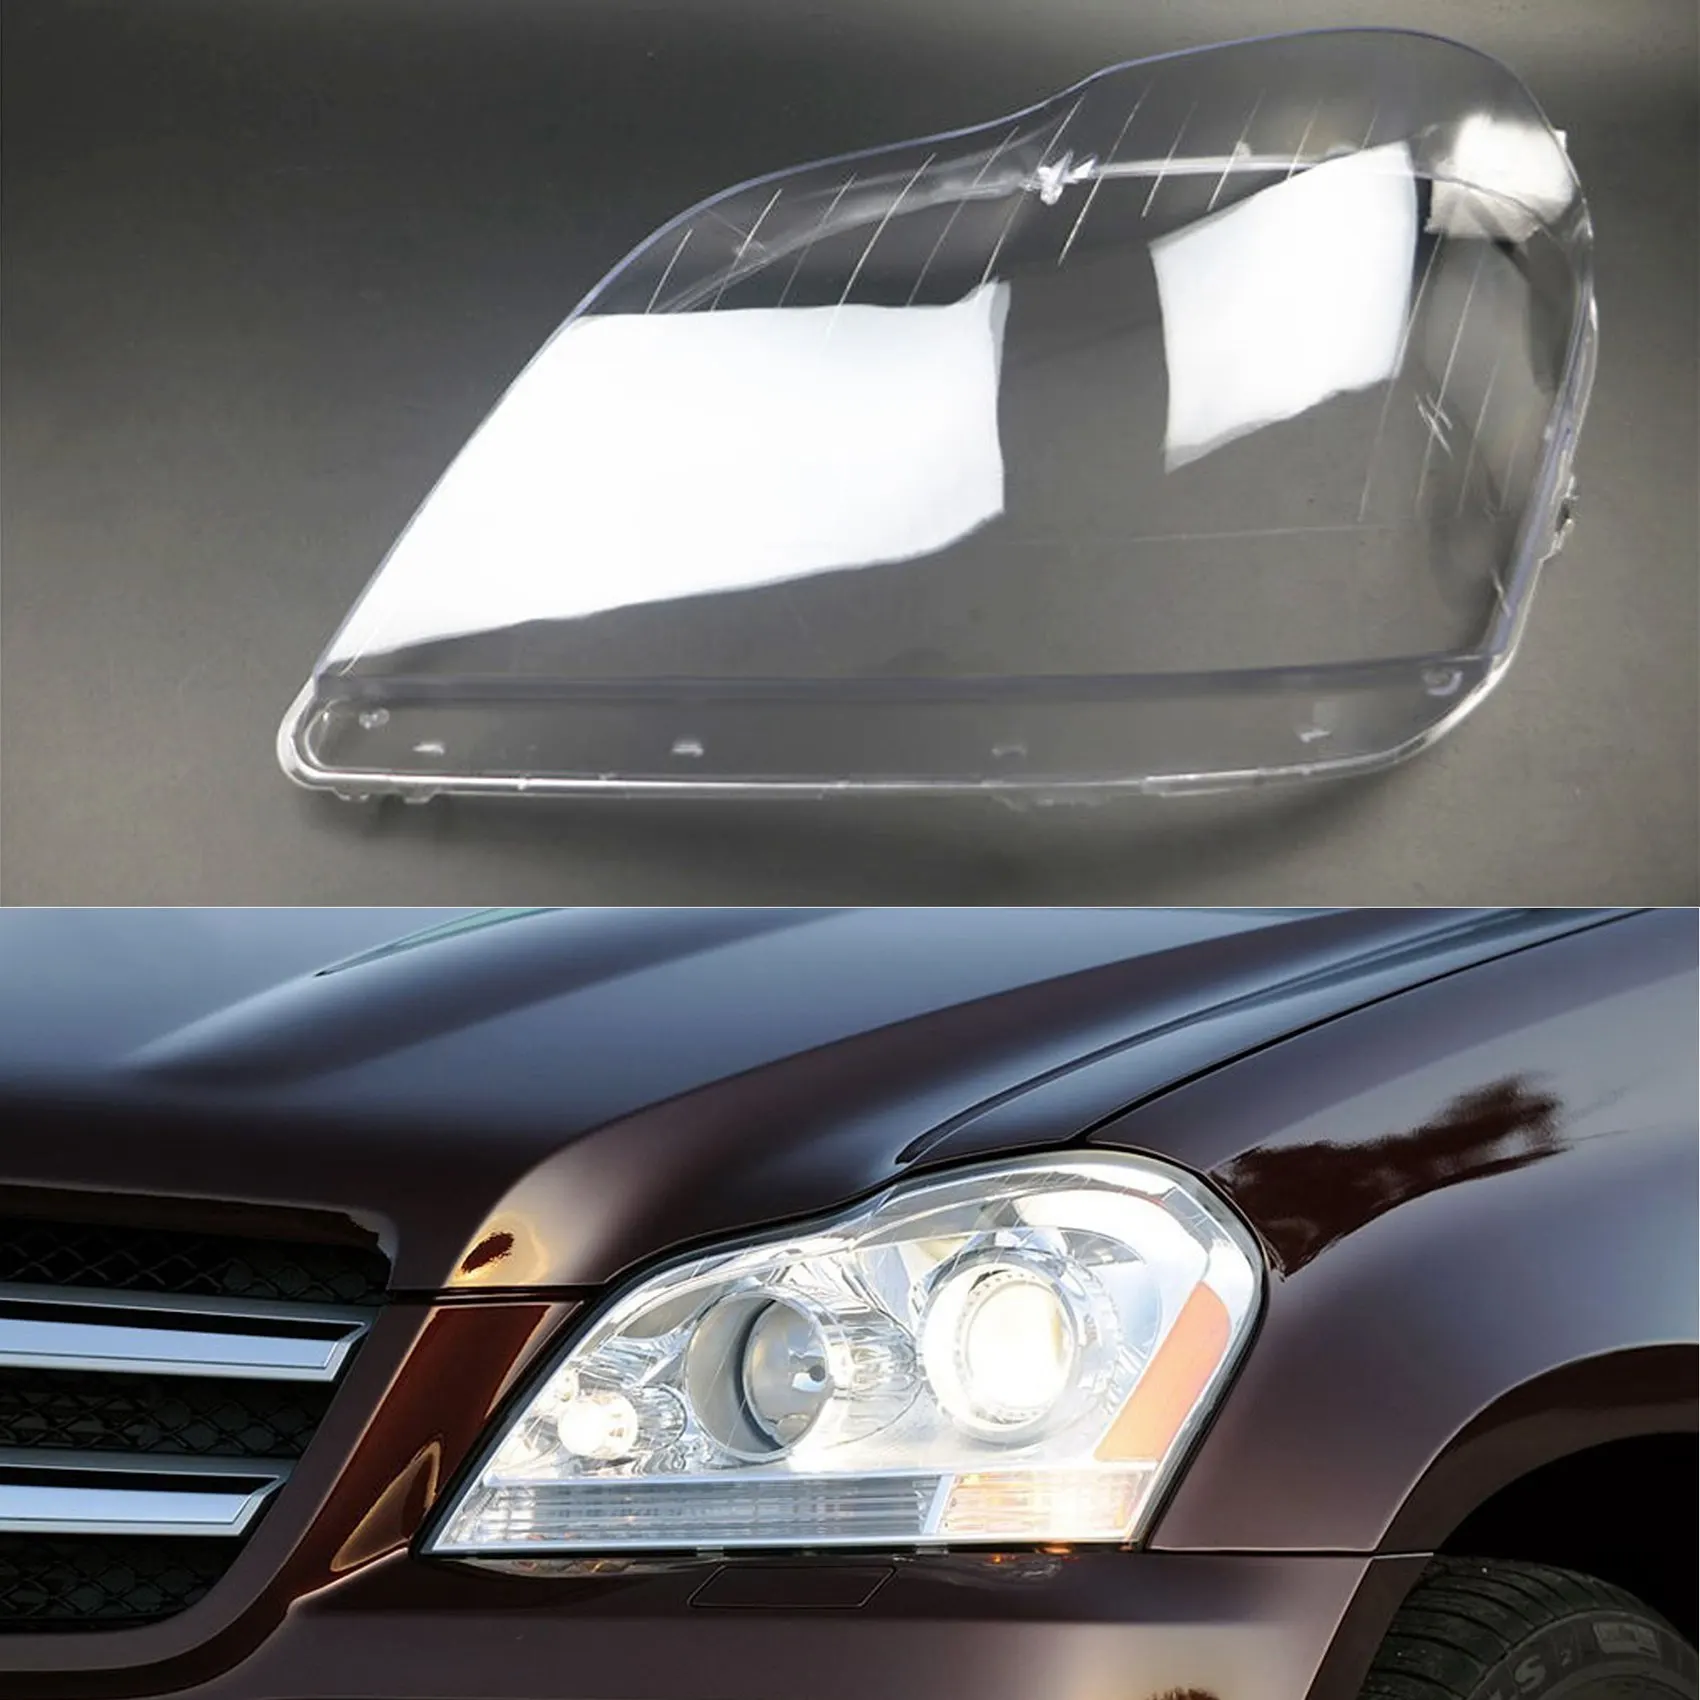 

1PCS Car Headlight Lens Head Light Lamp Cover Shell for Mercedes Benz X164 GL350 GL400 GL450 GL500 2006-2011, Left Side